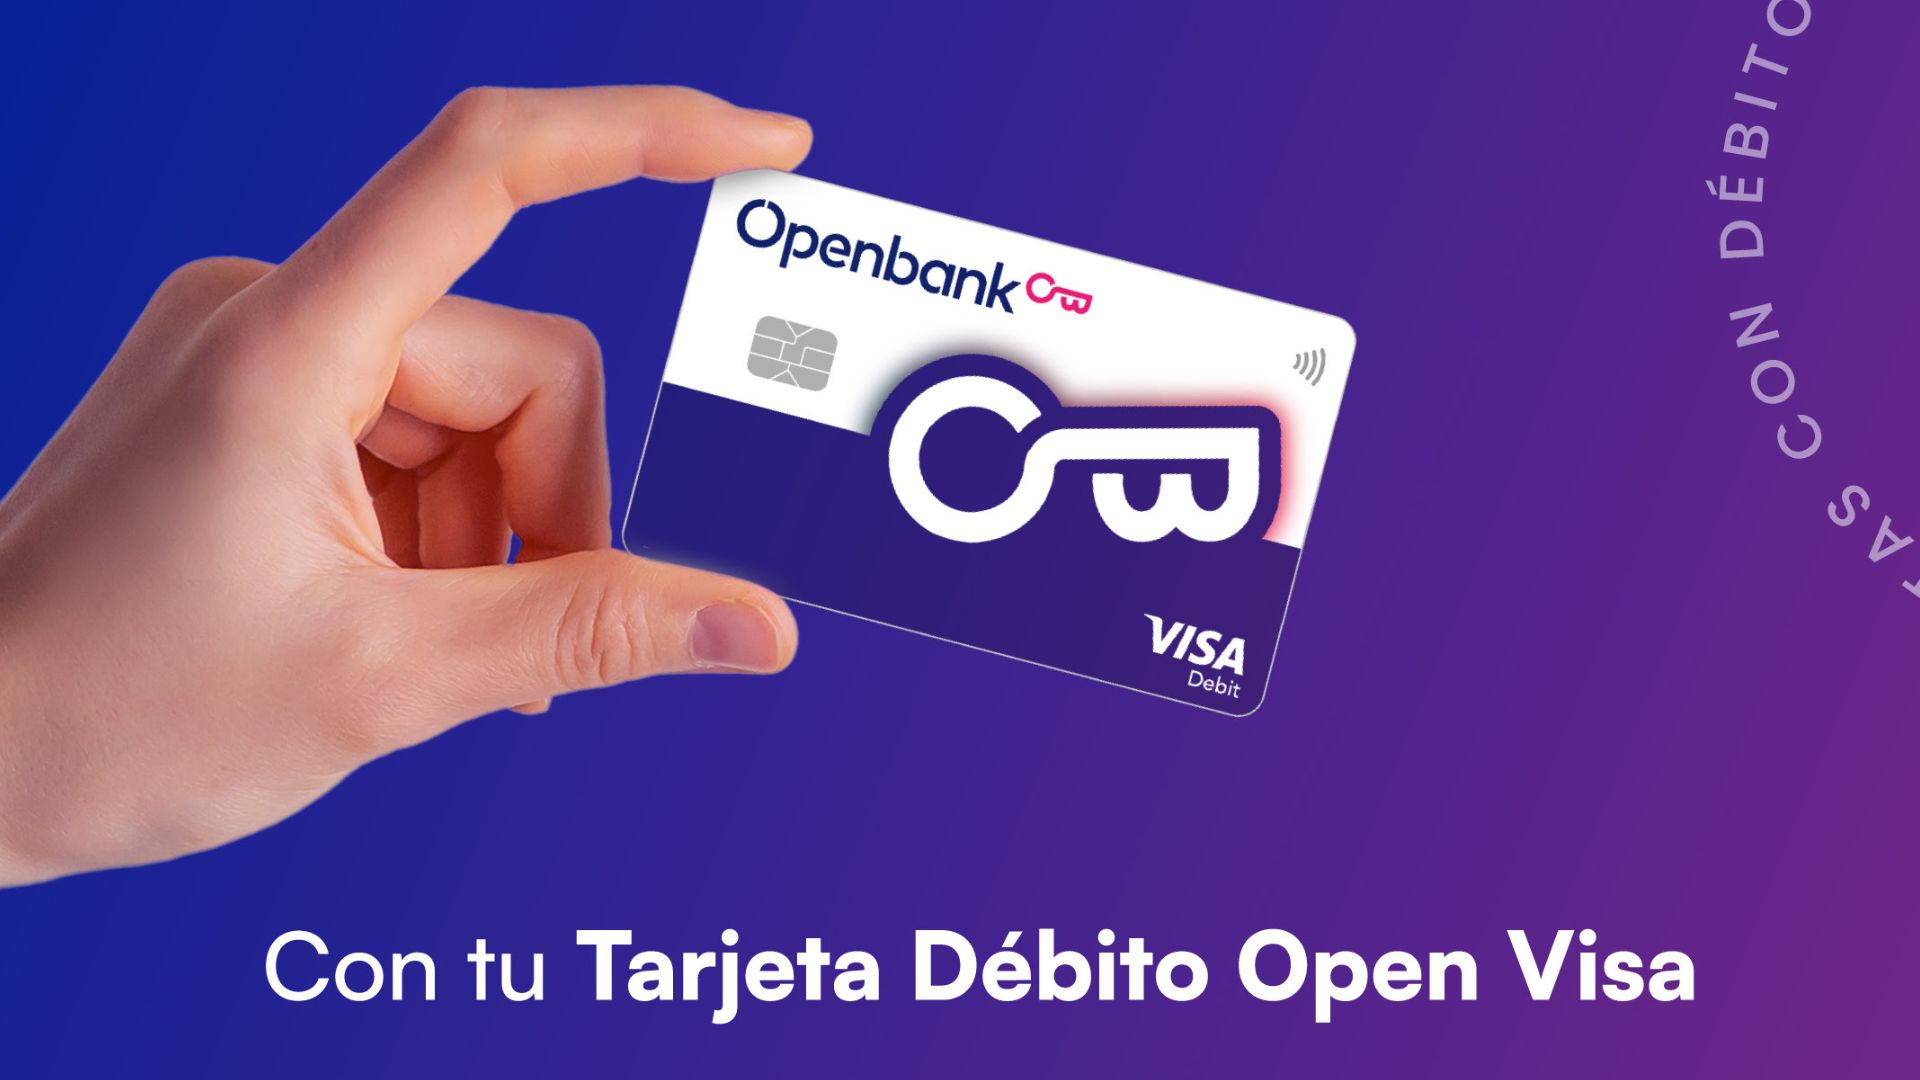 Openbank, mayores beneficios